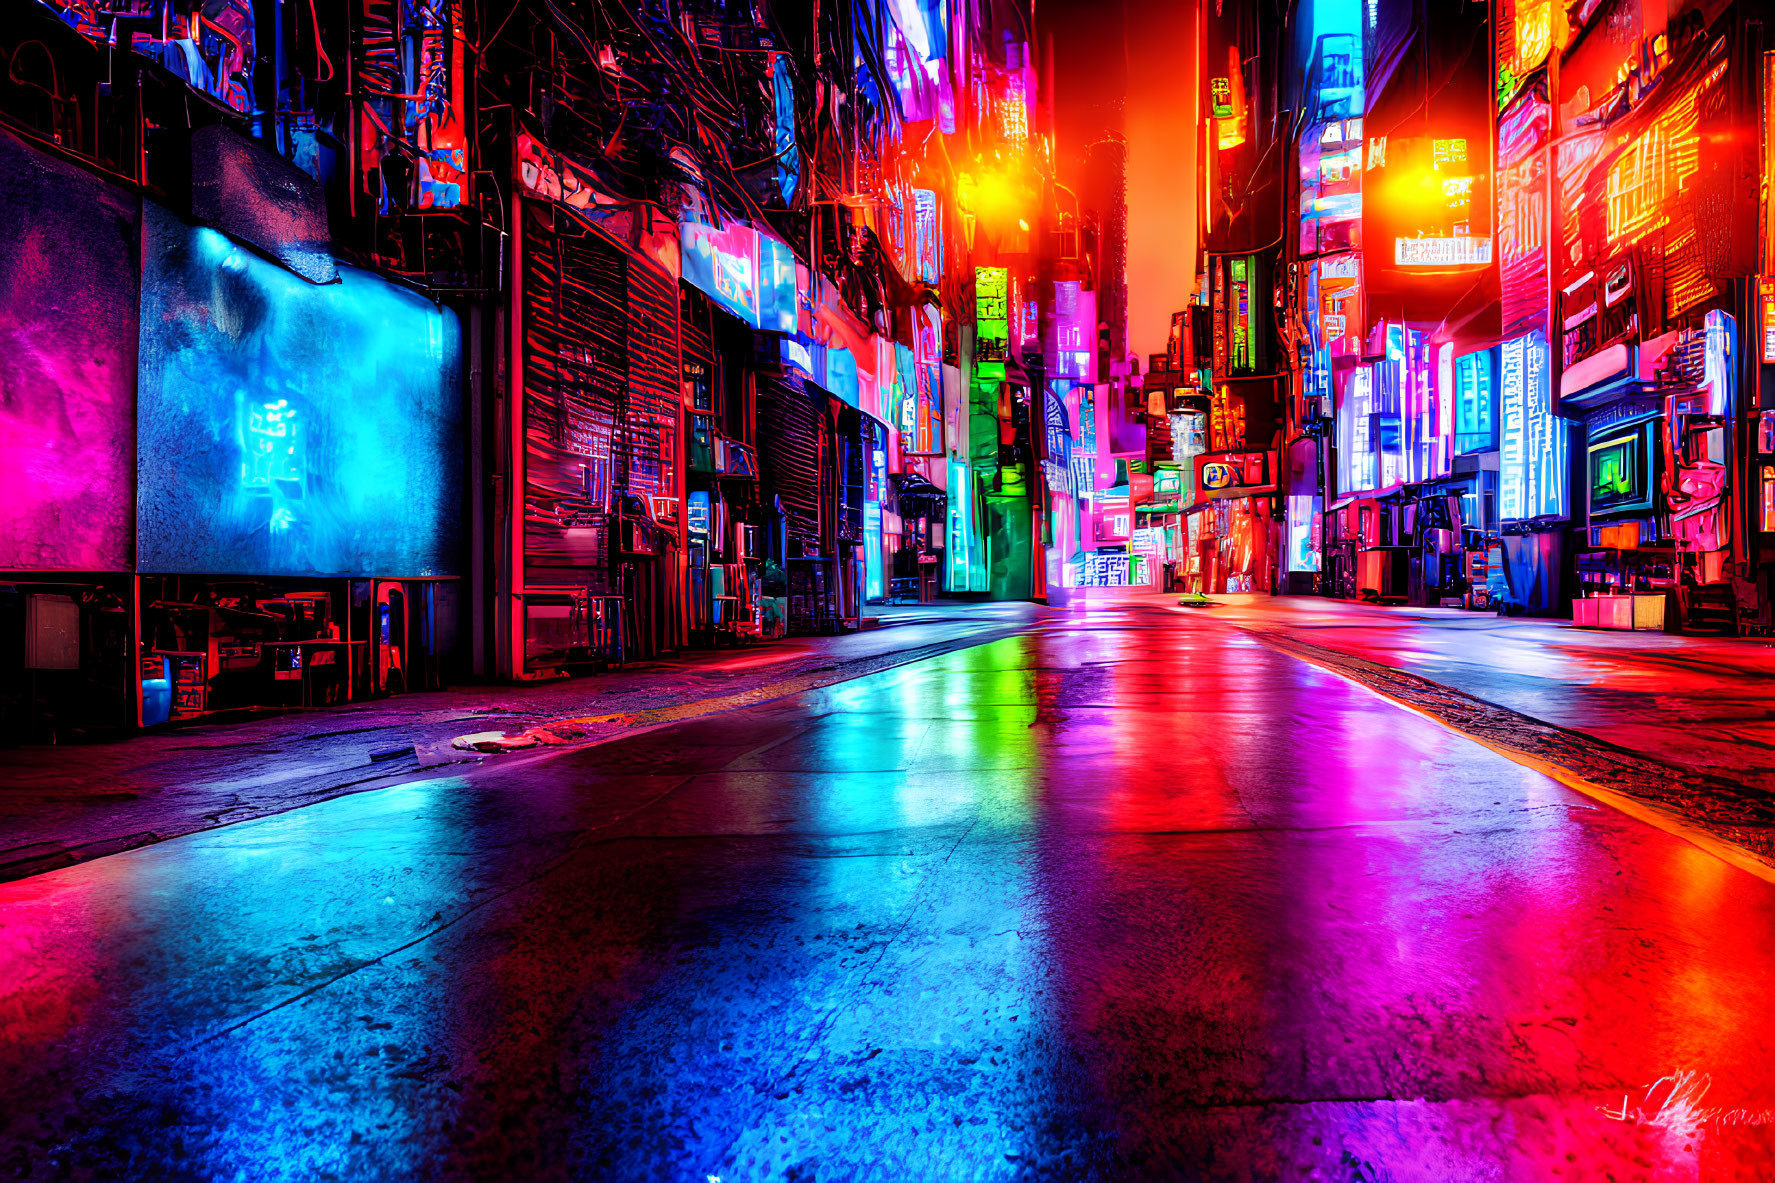 Neon-lit city street at night with cyberpunk aesthetic